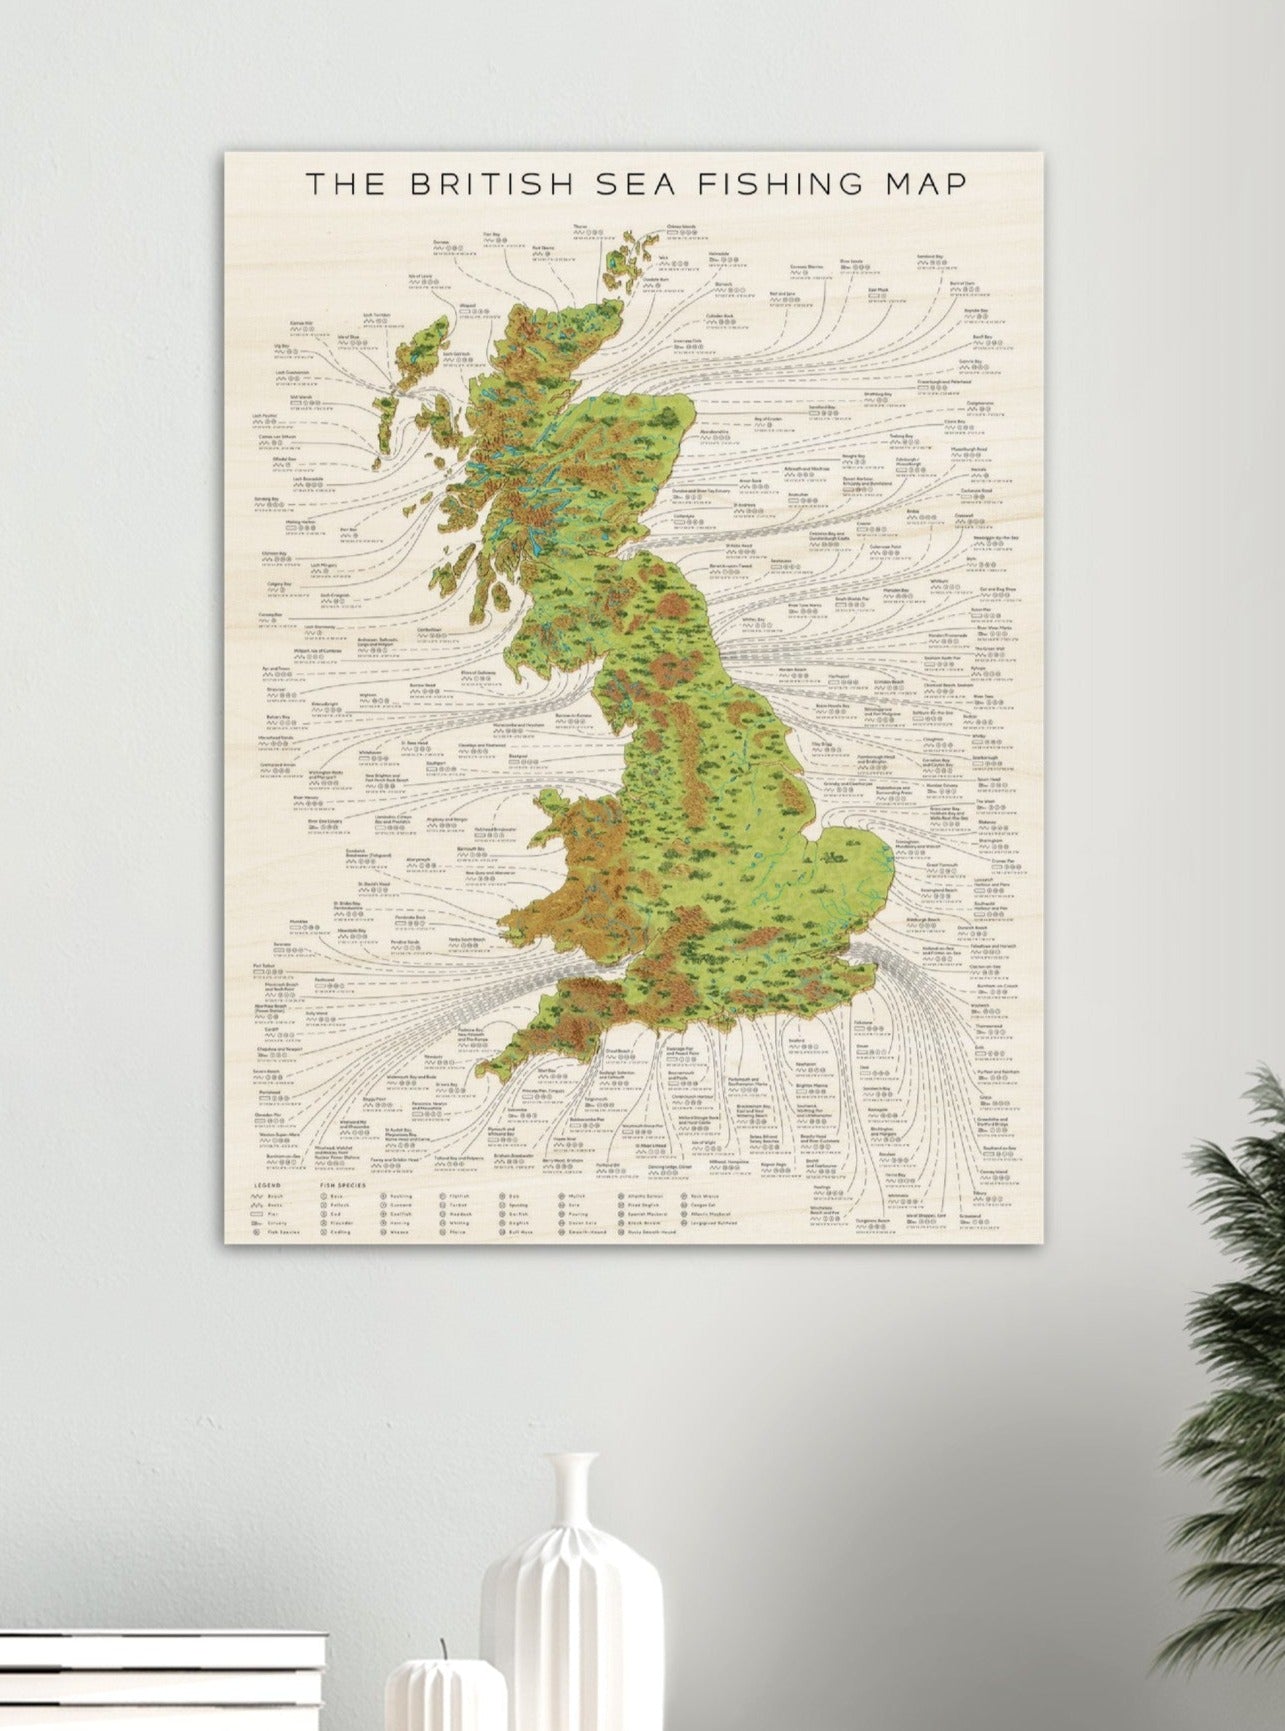 The British Sea Fishing Map